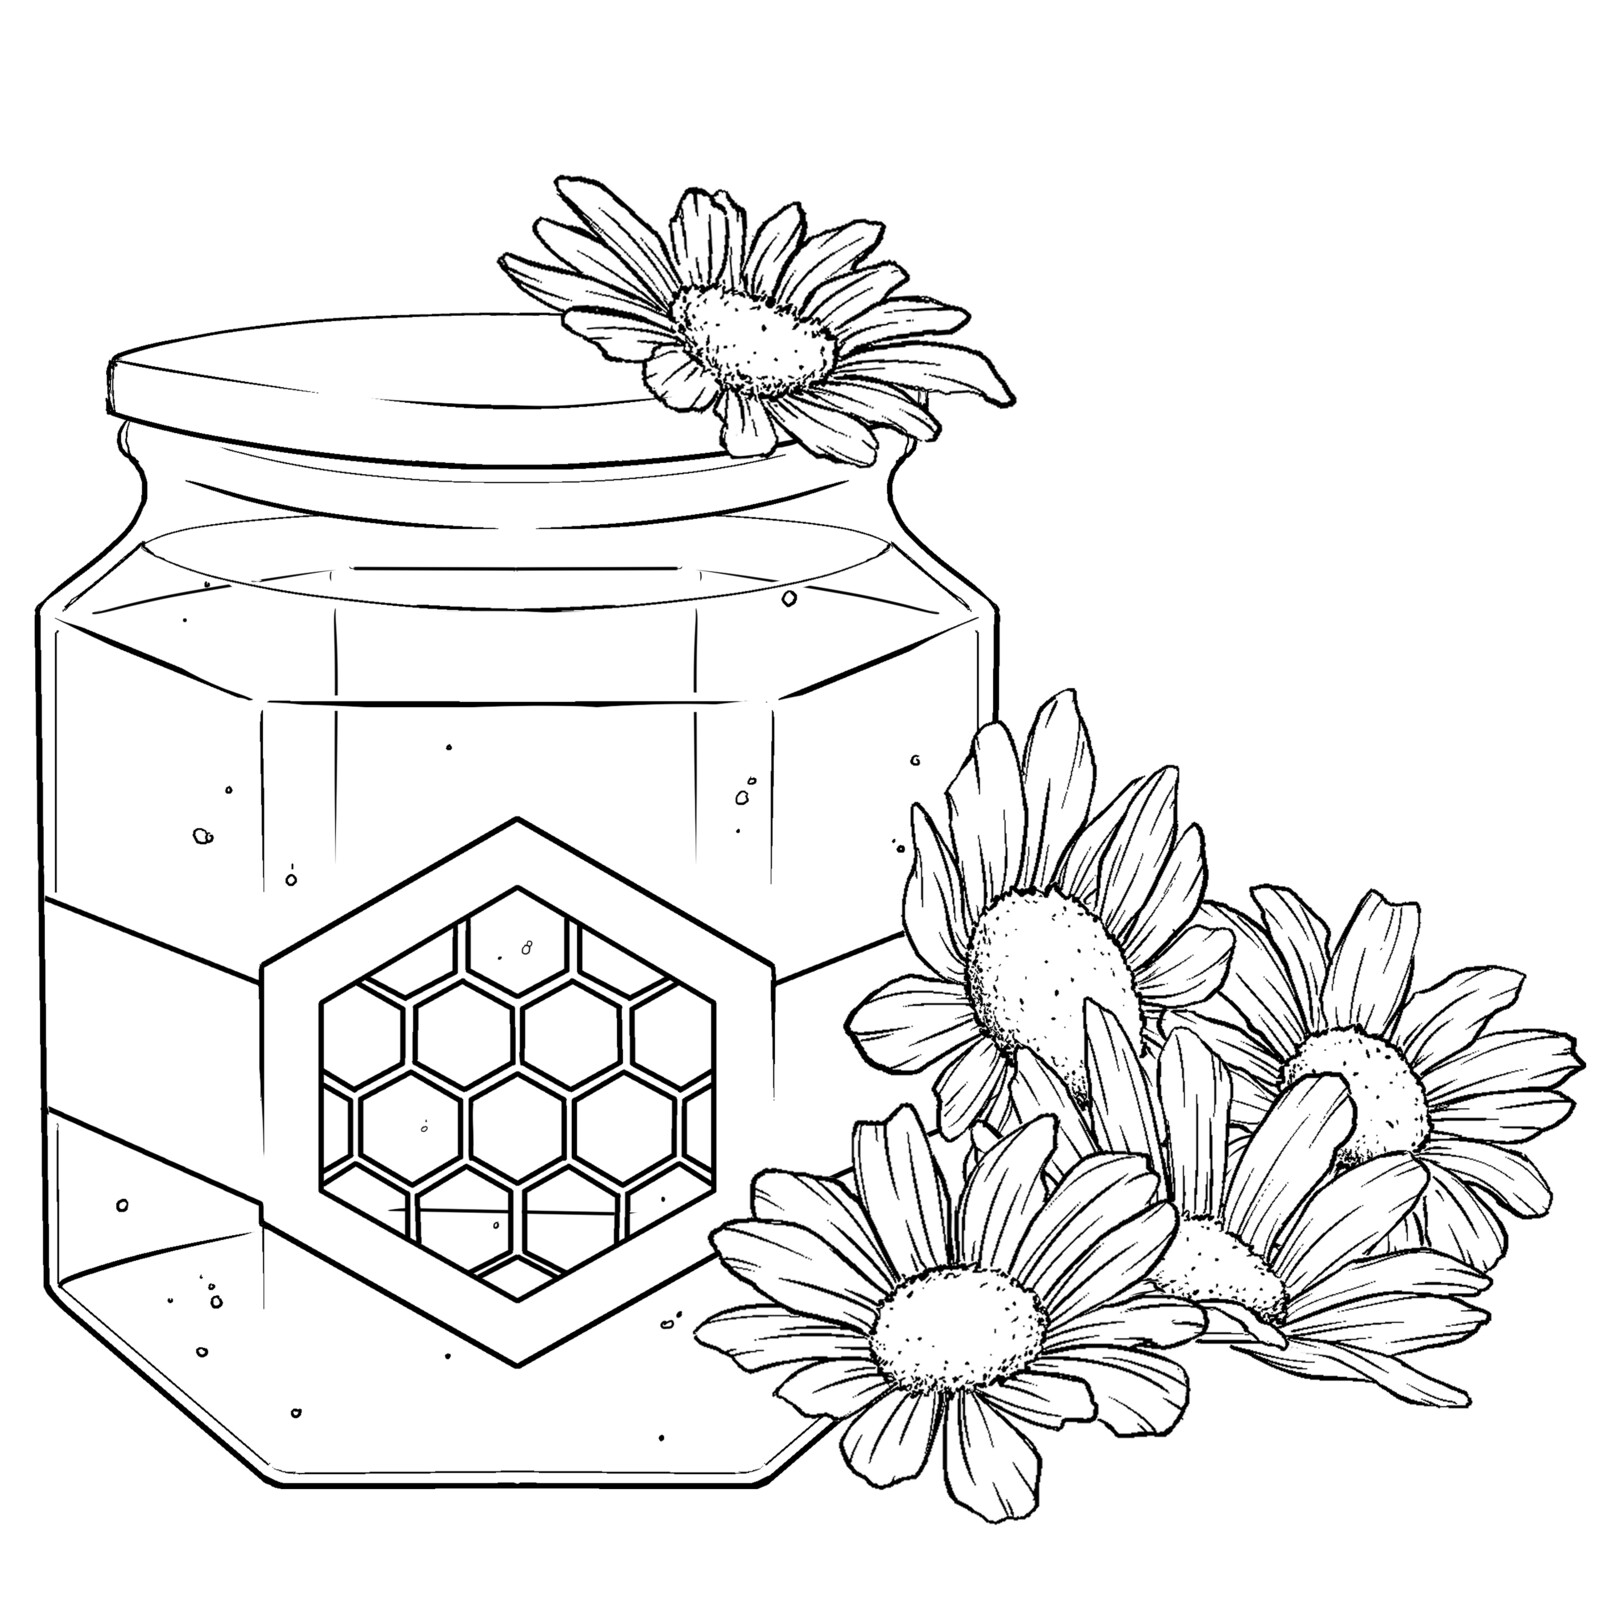 Honey jar 2 line art